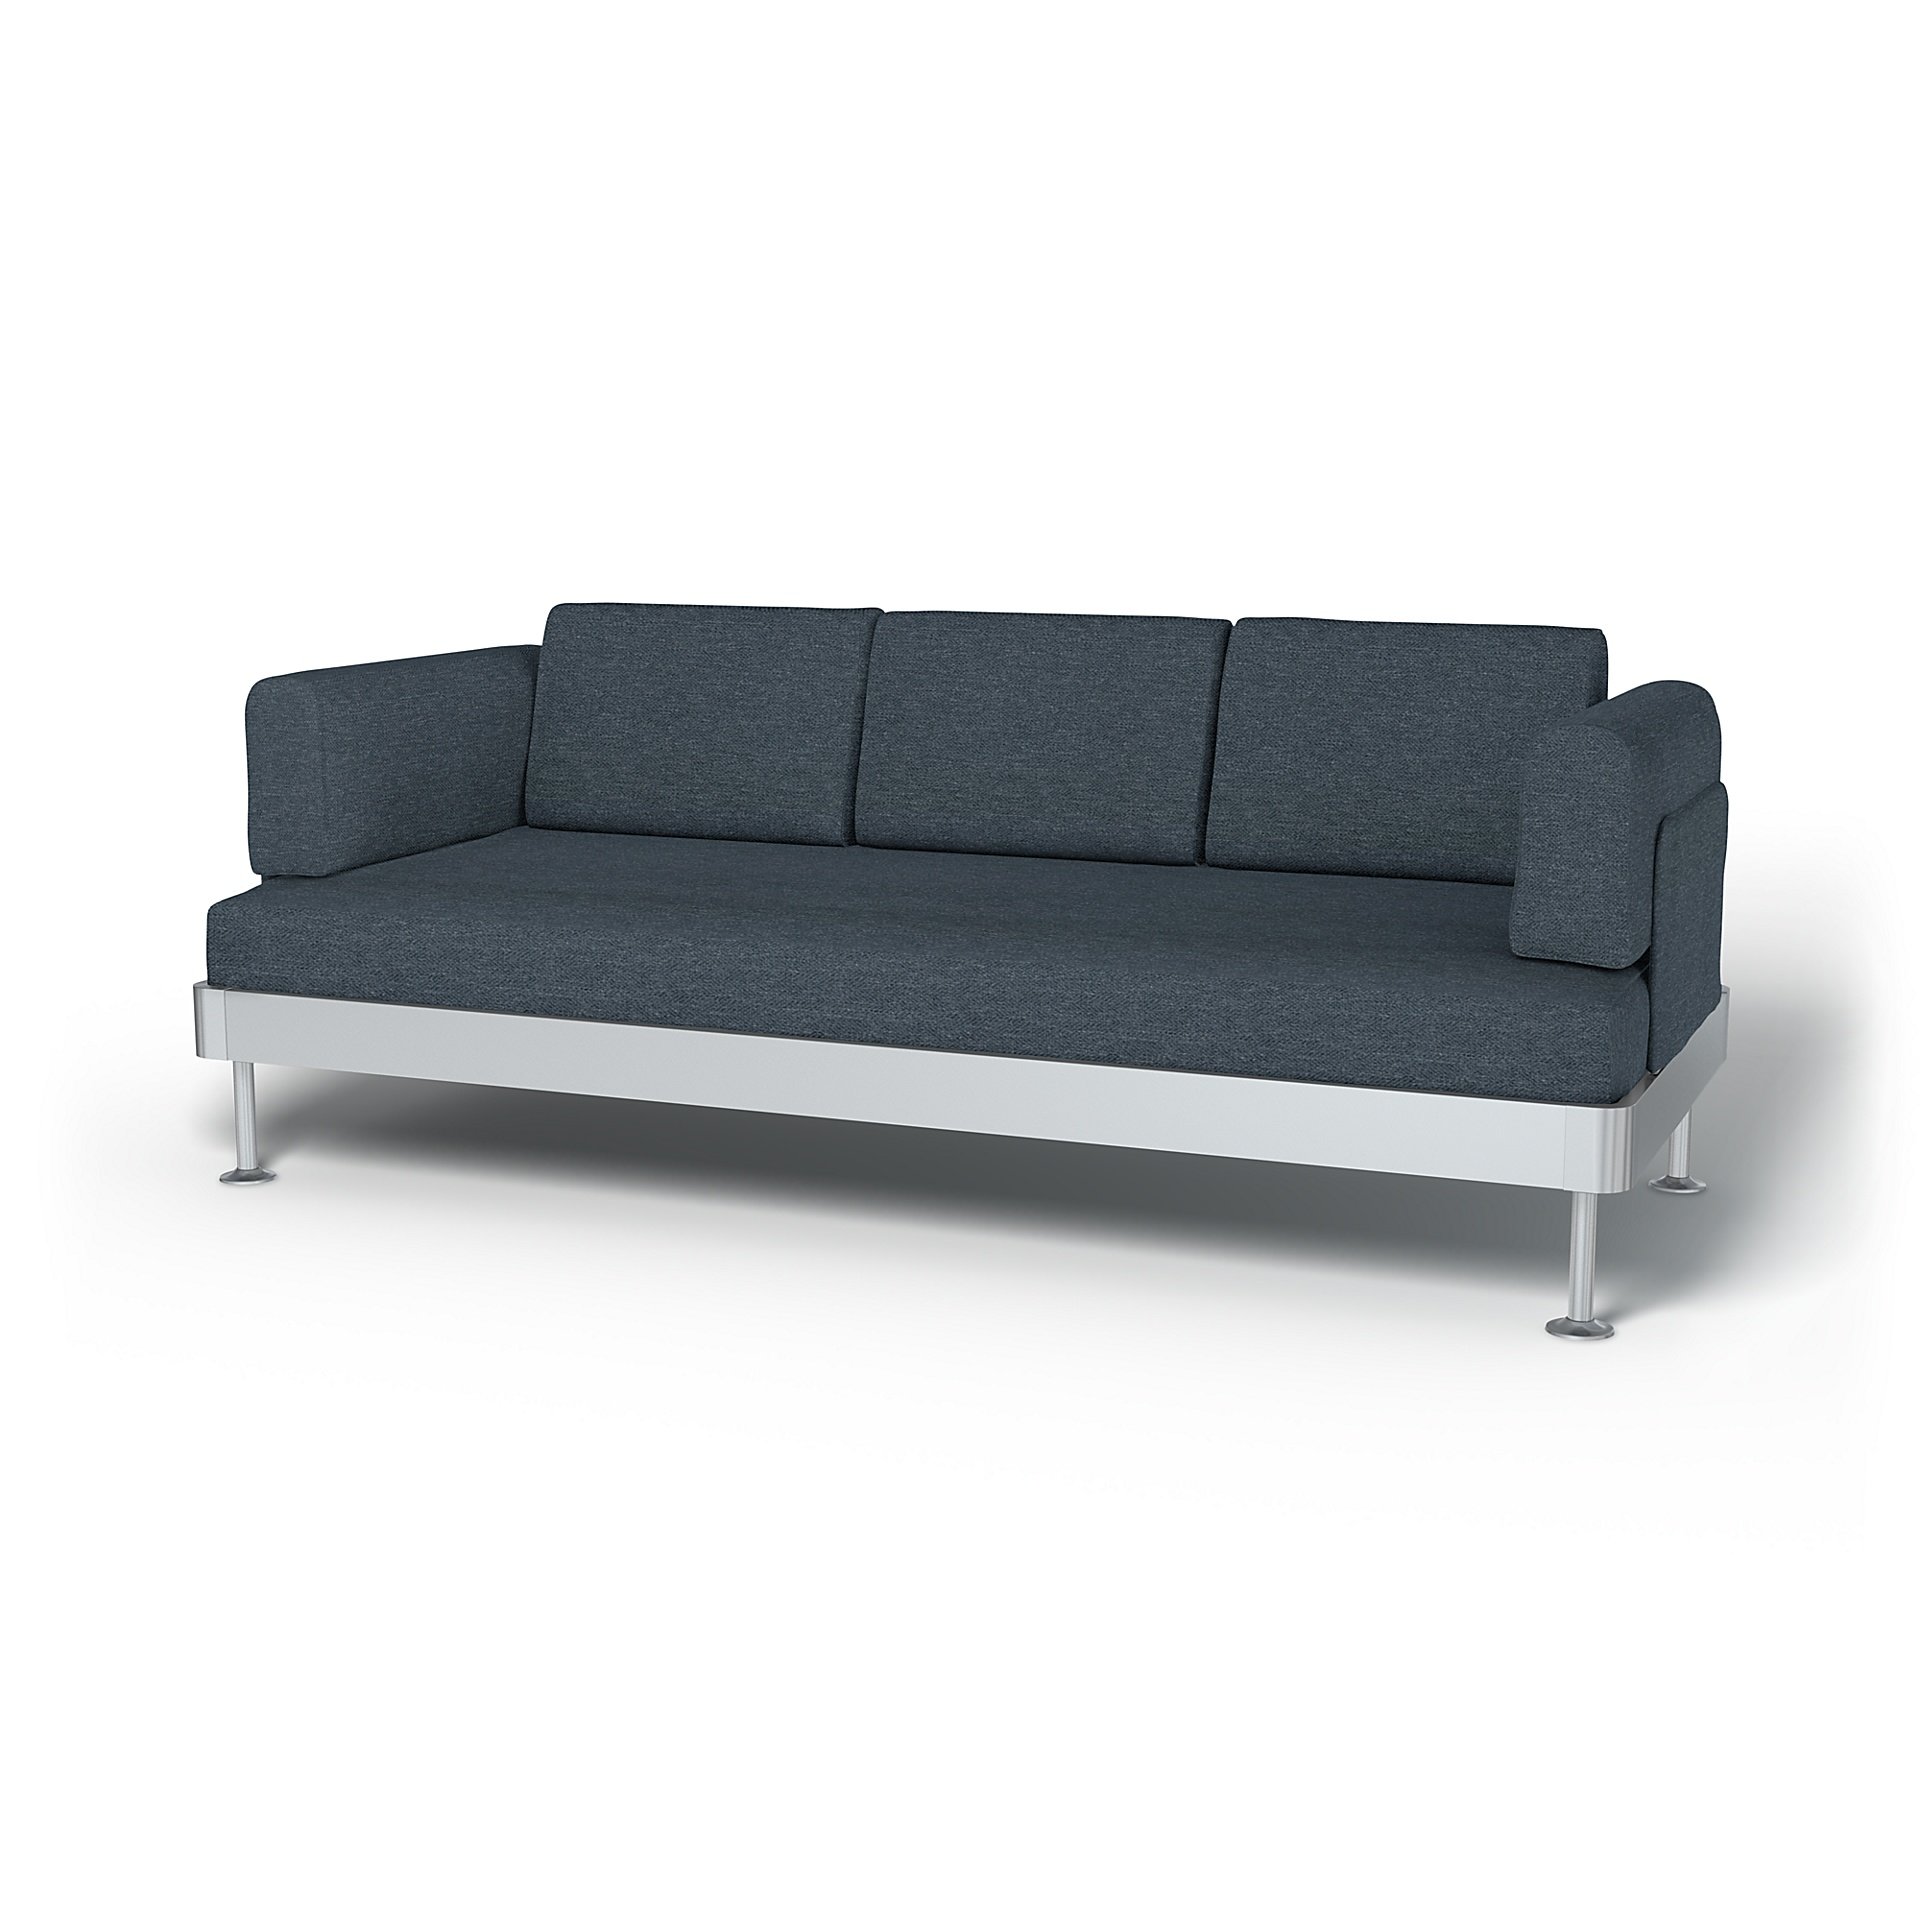 IKEA - Delaktig 3 Seater Sofa Cover, Denim, Boucle & Texture - Bemz